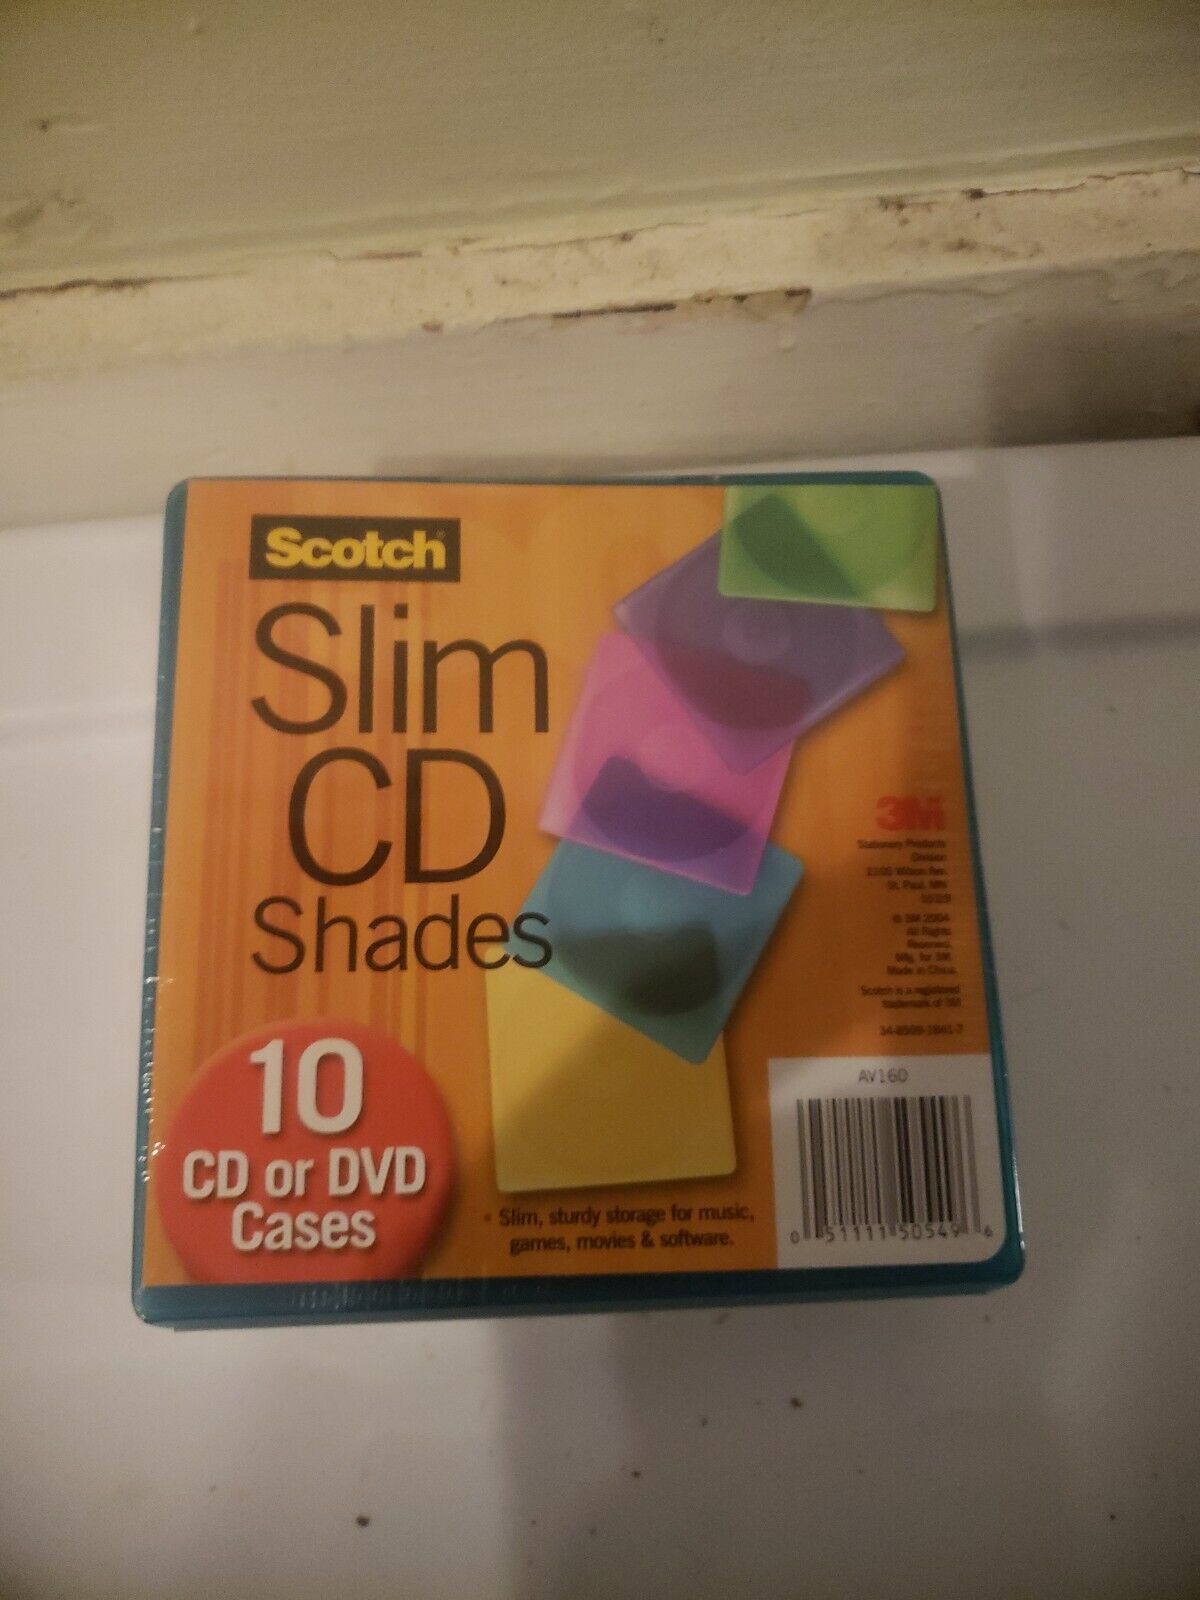 VINTAGE SCOTCH 3M SLIM CD / DVD SHADES / CASES SEALED ~ 10 Pack ~ AV160